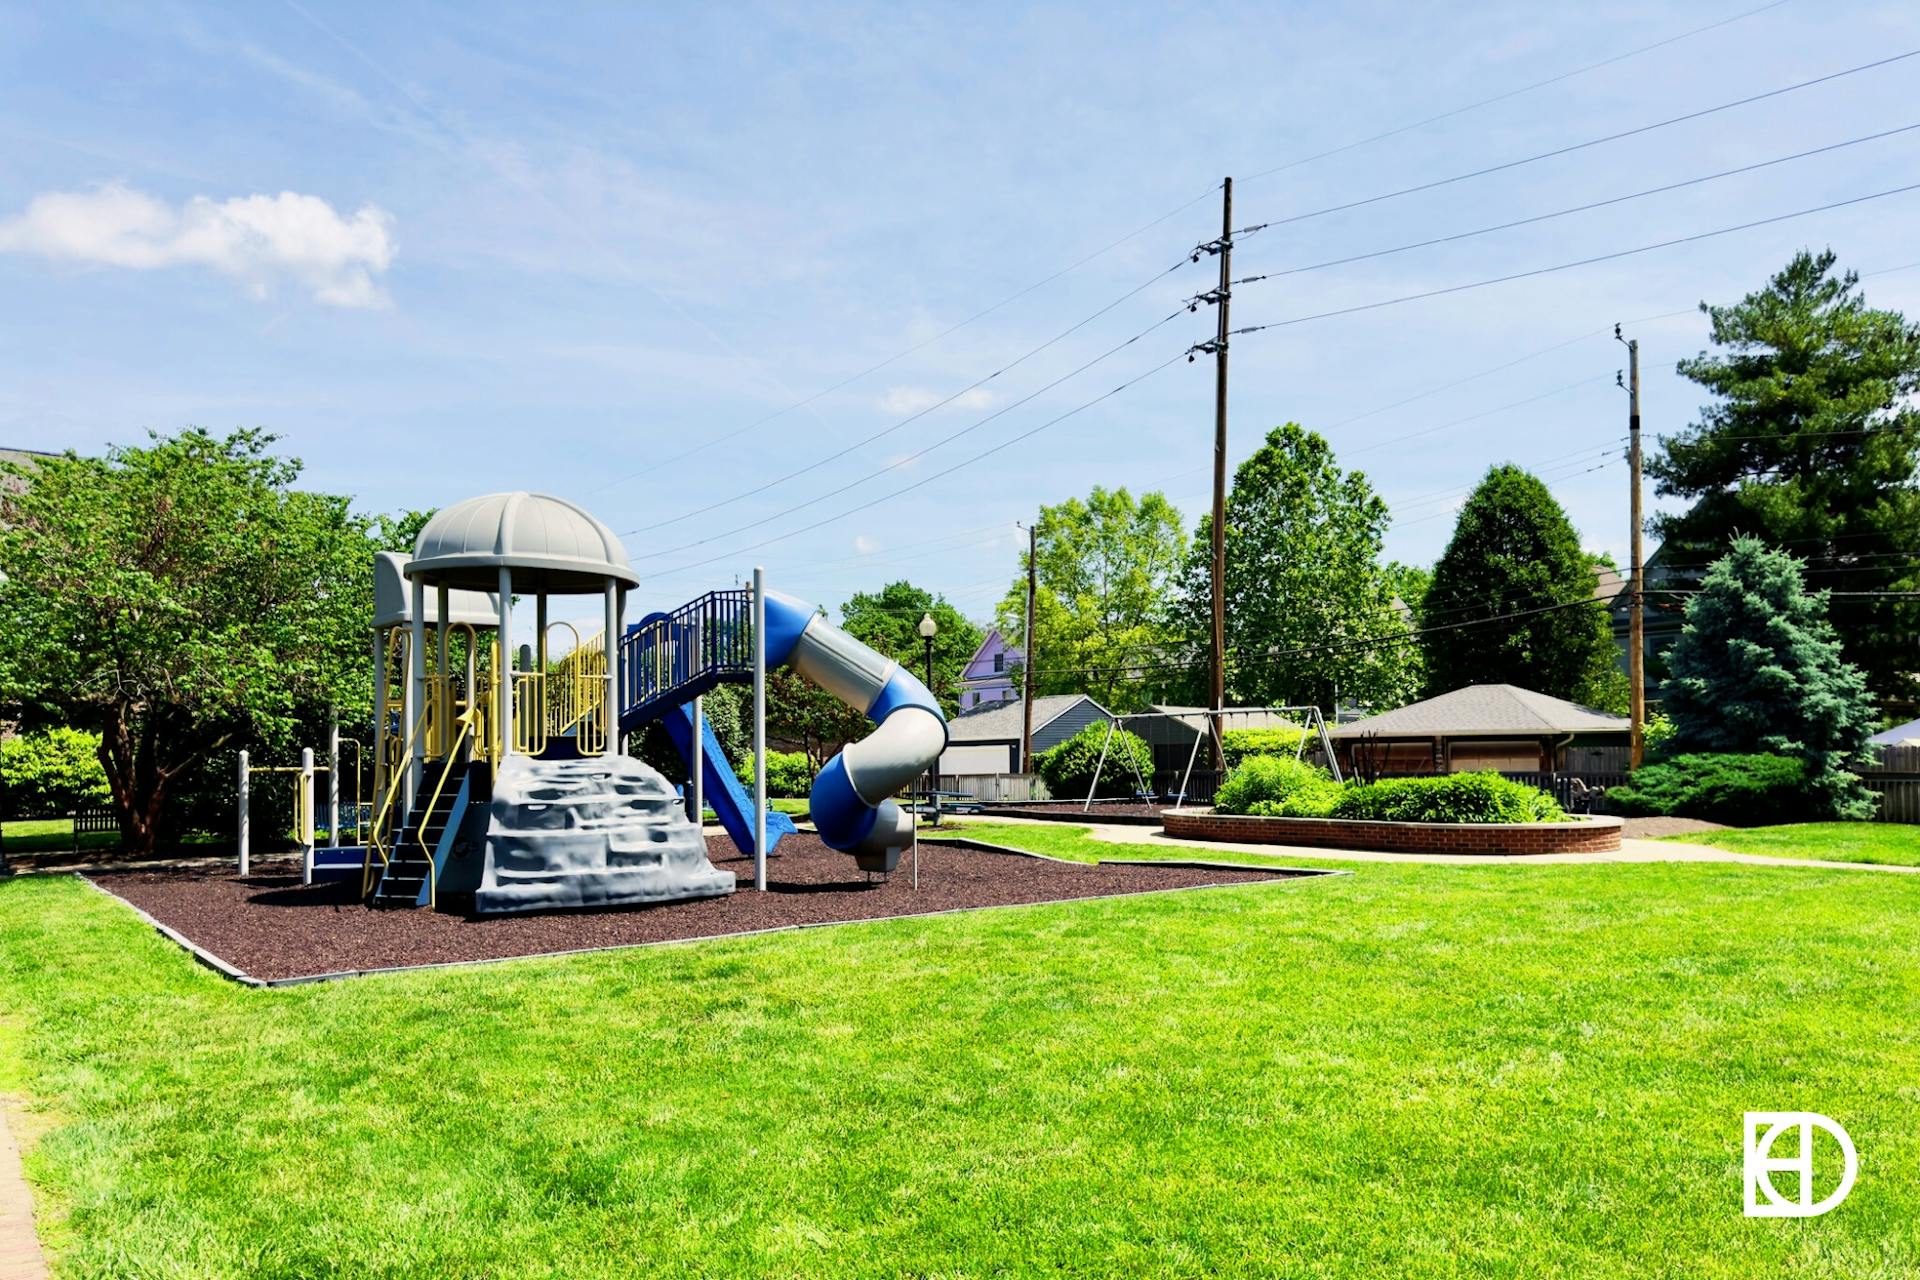 Photo of the playground at Herron-Morton Place Park